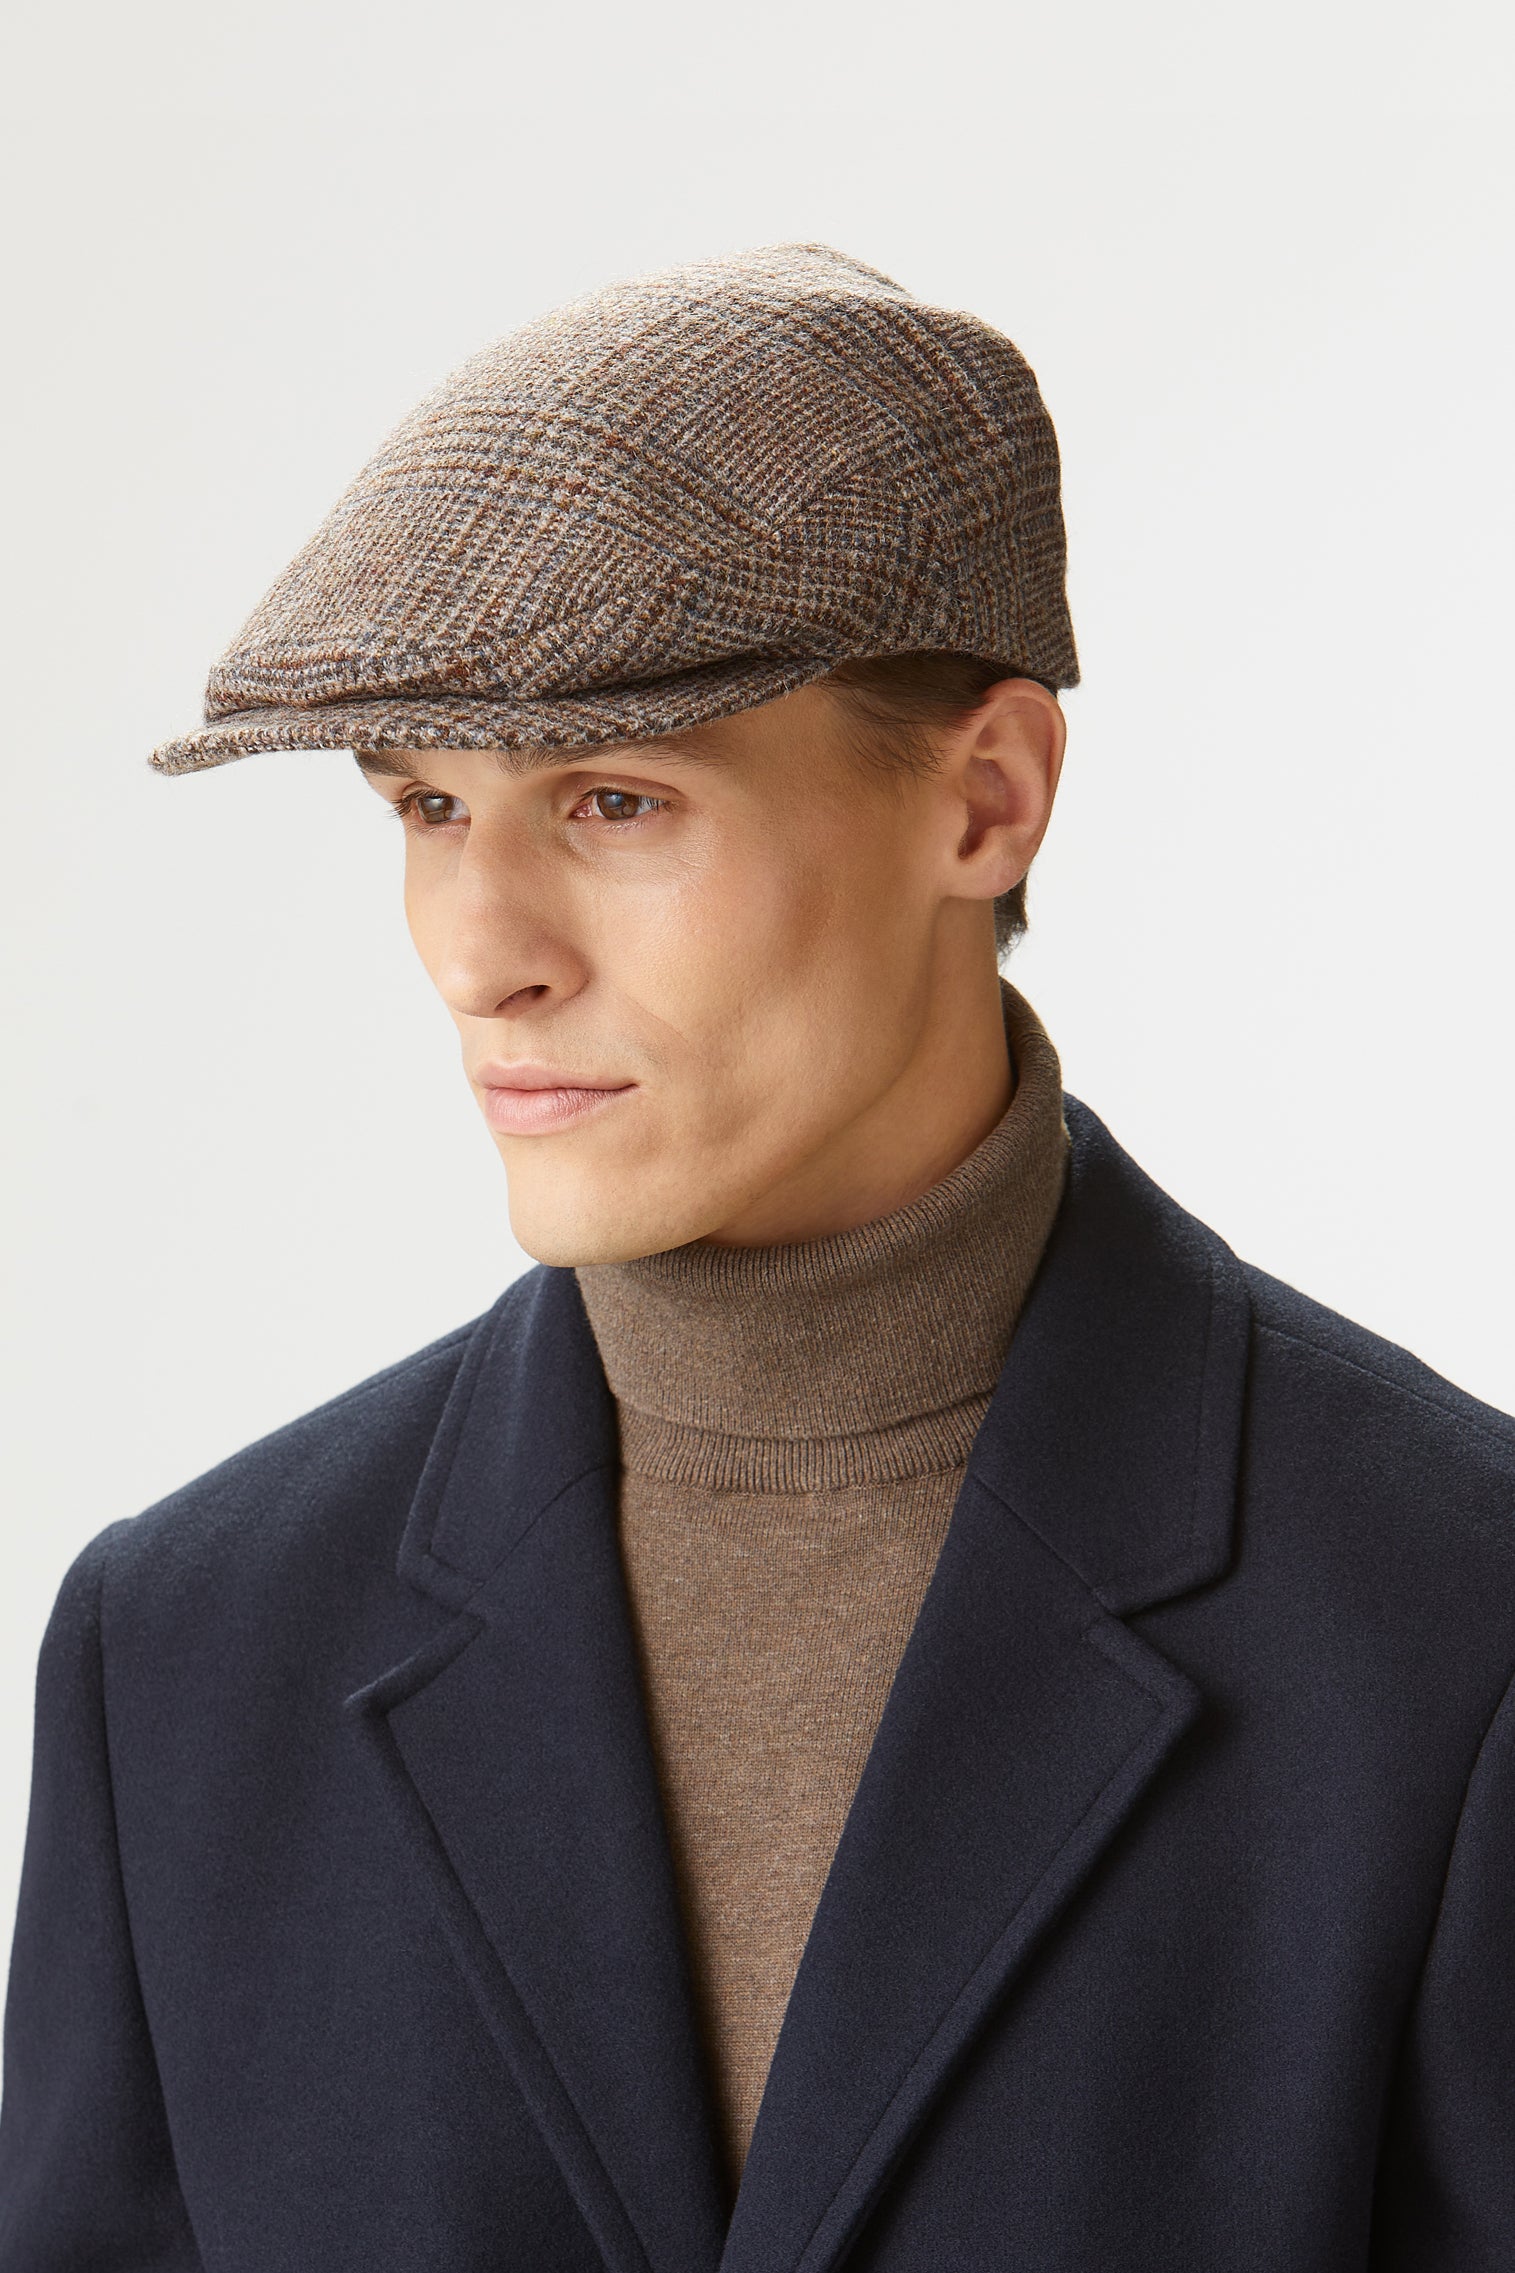 Drifter Glen Check Flat Cap - New Season Hat Collection - Lock & Co. Hatters London UK